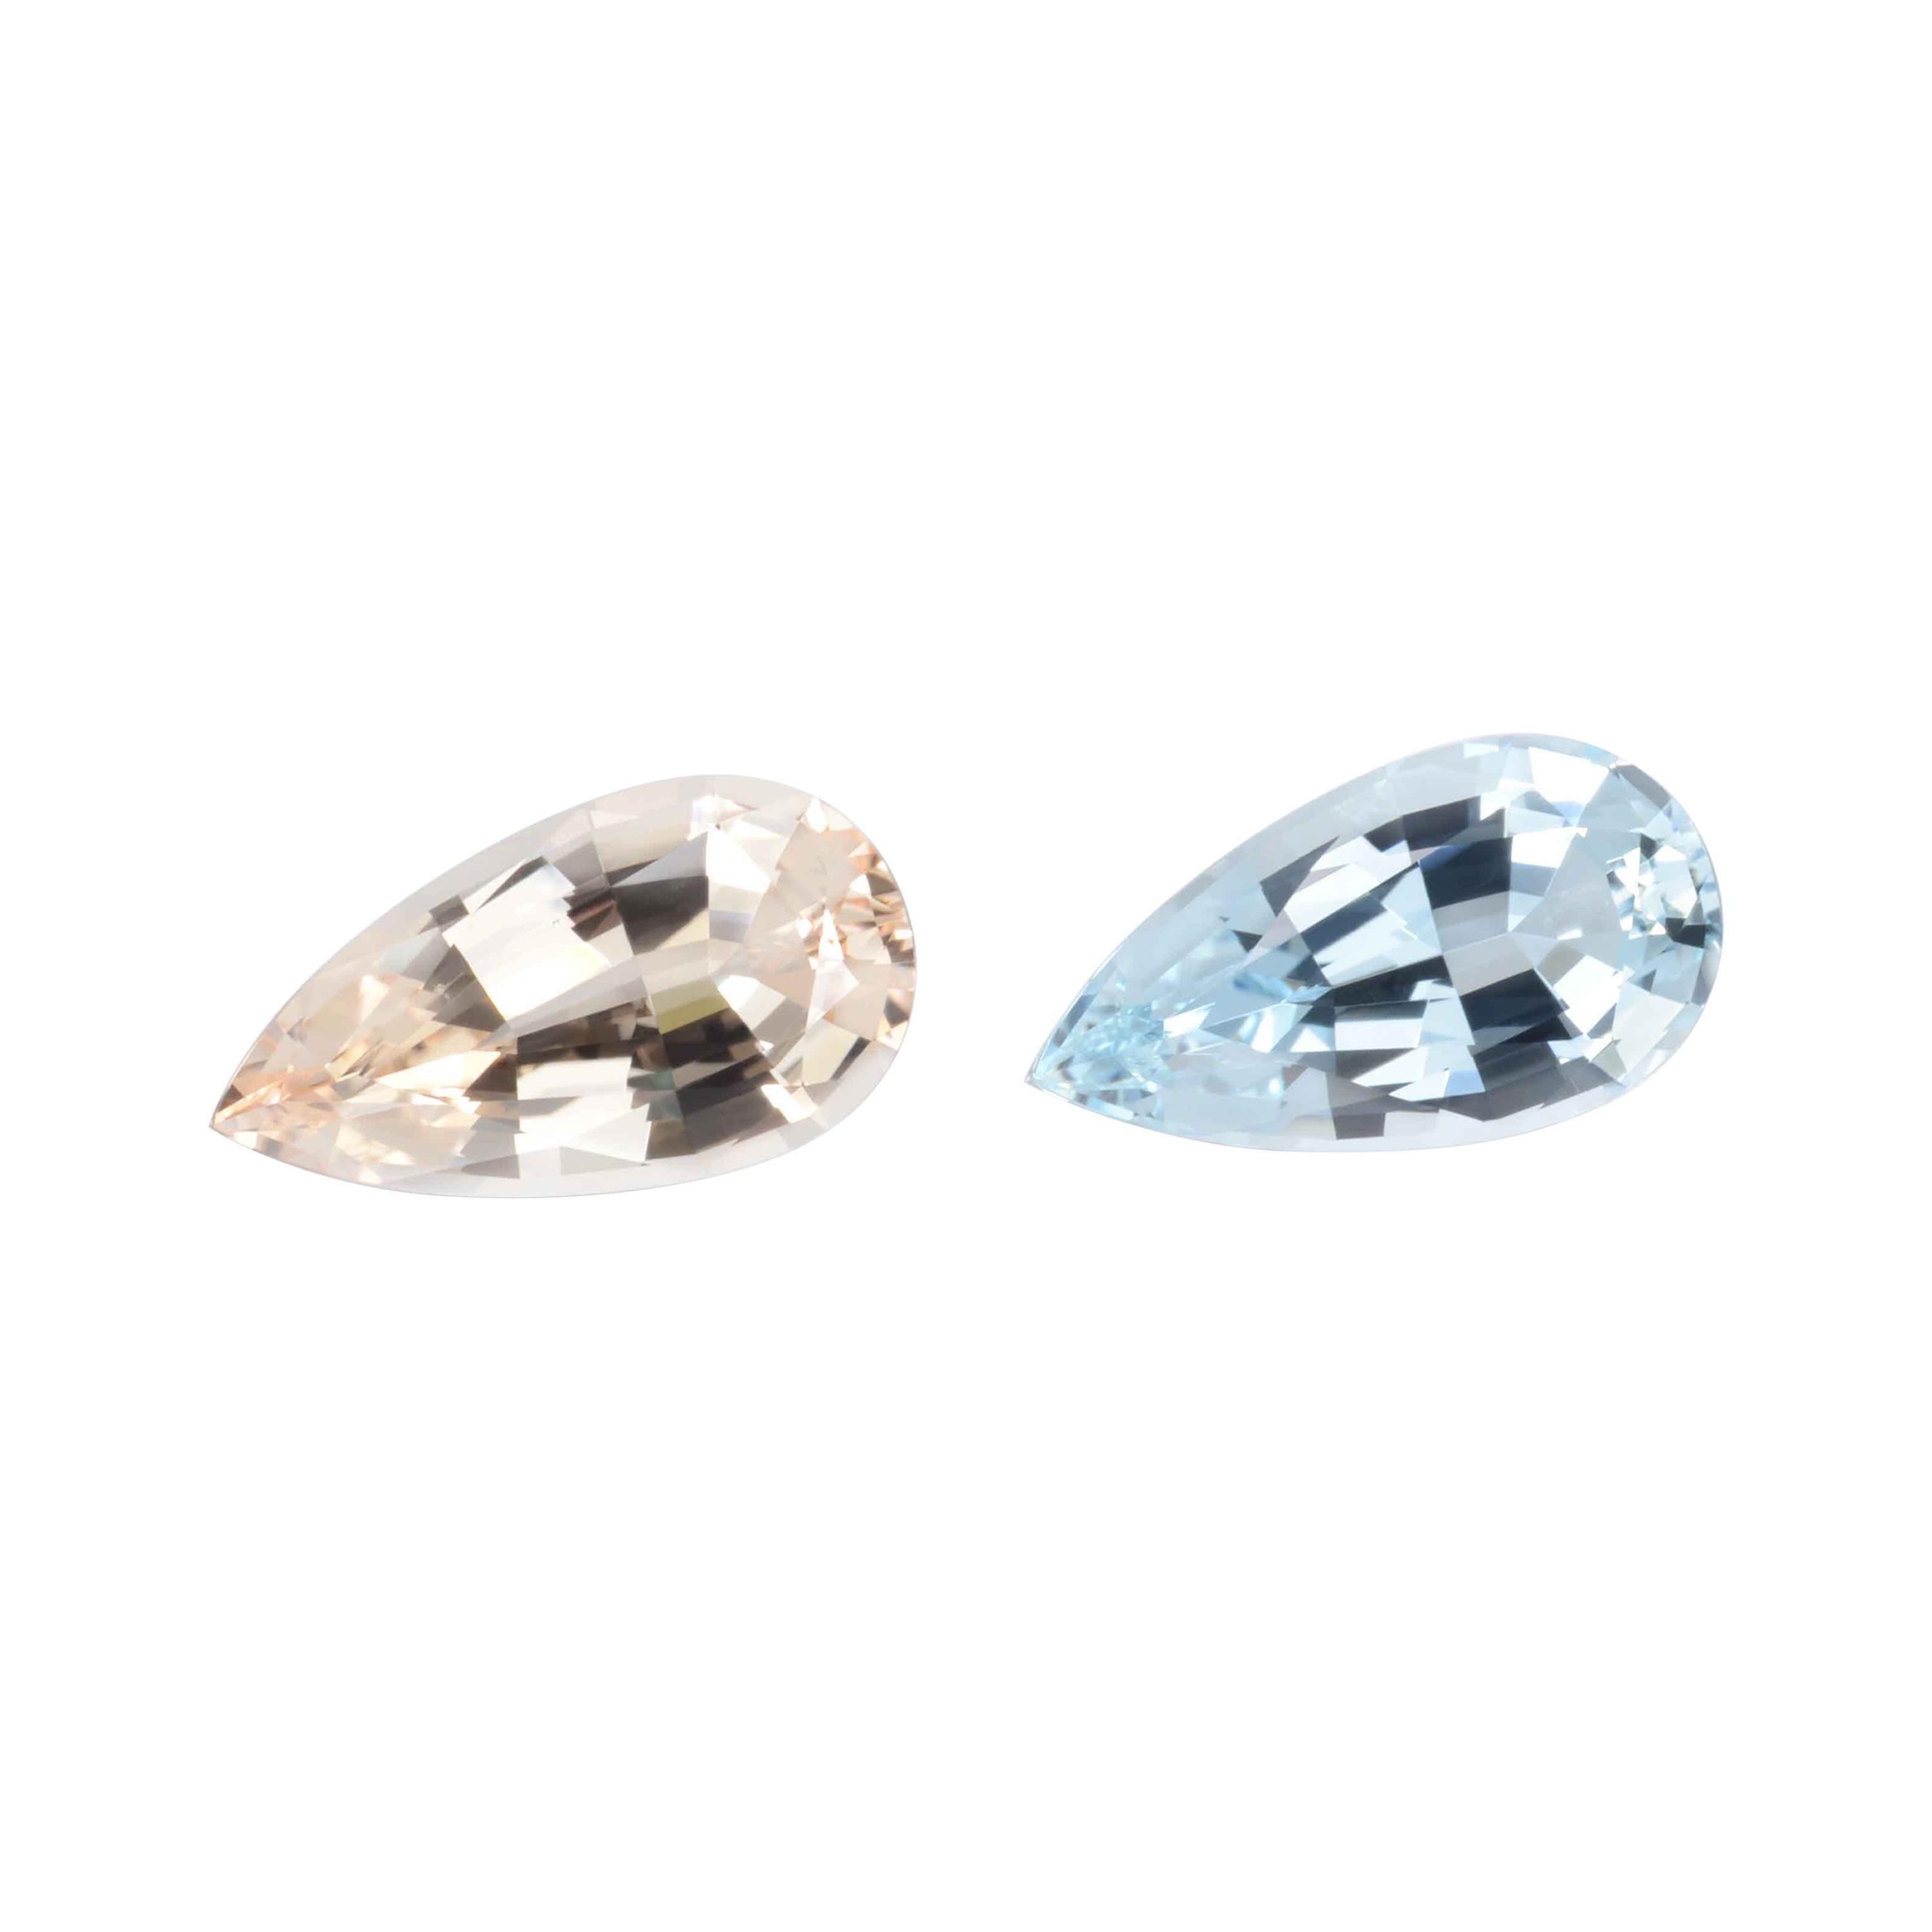 Aquamarine Morganite Earrings Gemstone Pair of 8.47 Carat Unset Loose Gemstones